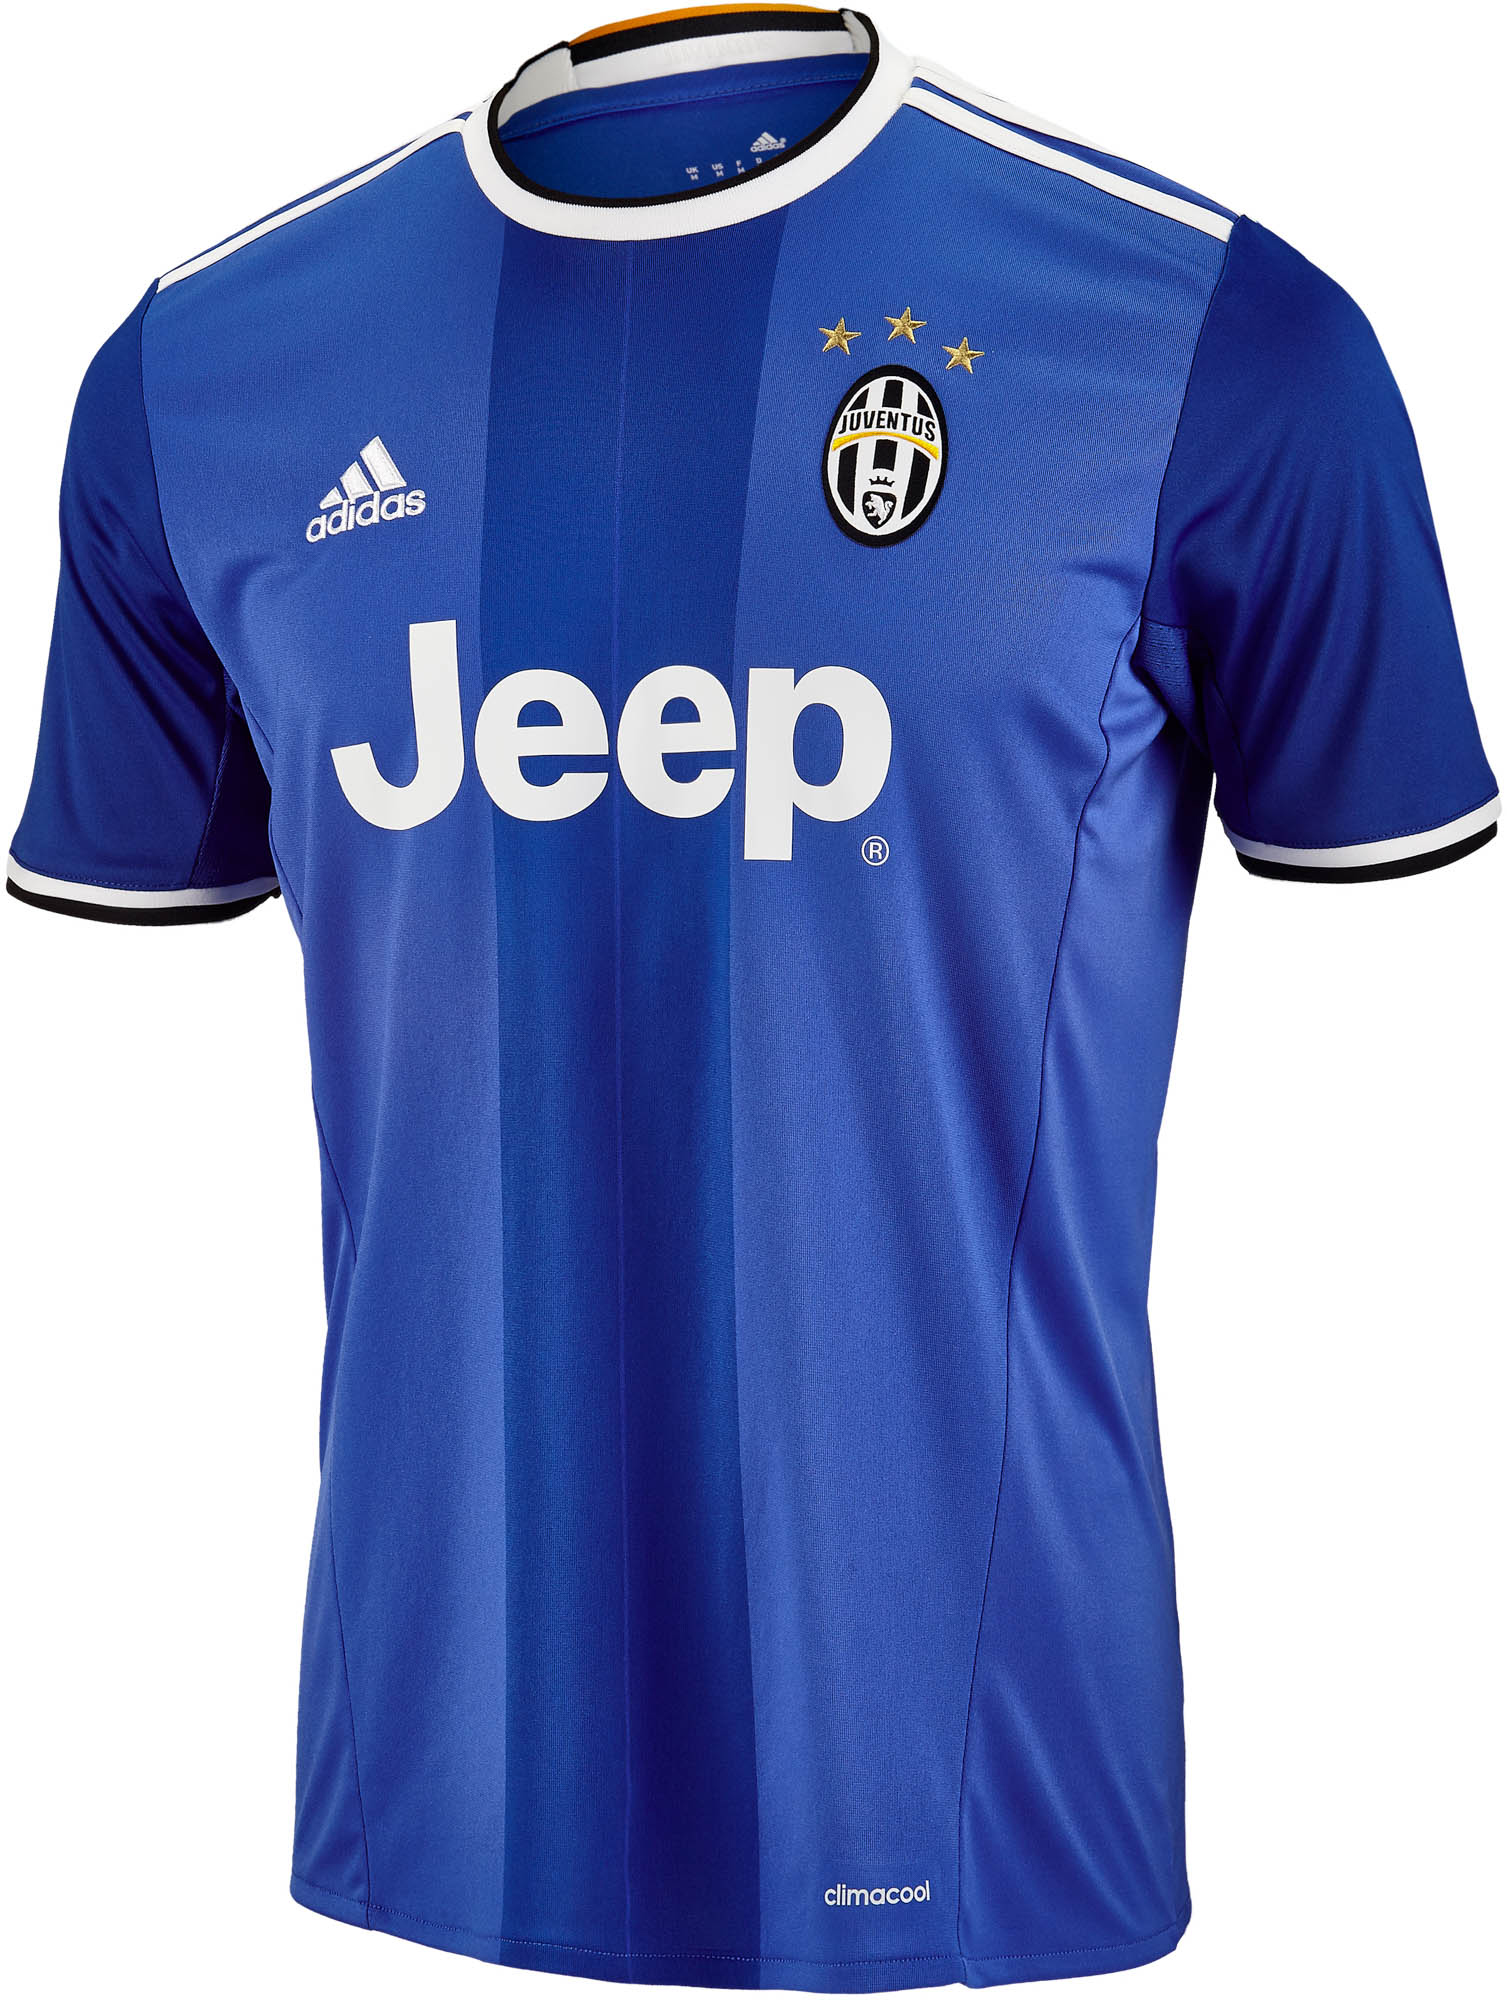 Verspreiding Traditioneel As adidas Juventus Away Jersey - 2016 Juventus Soccer Jerseys